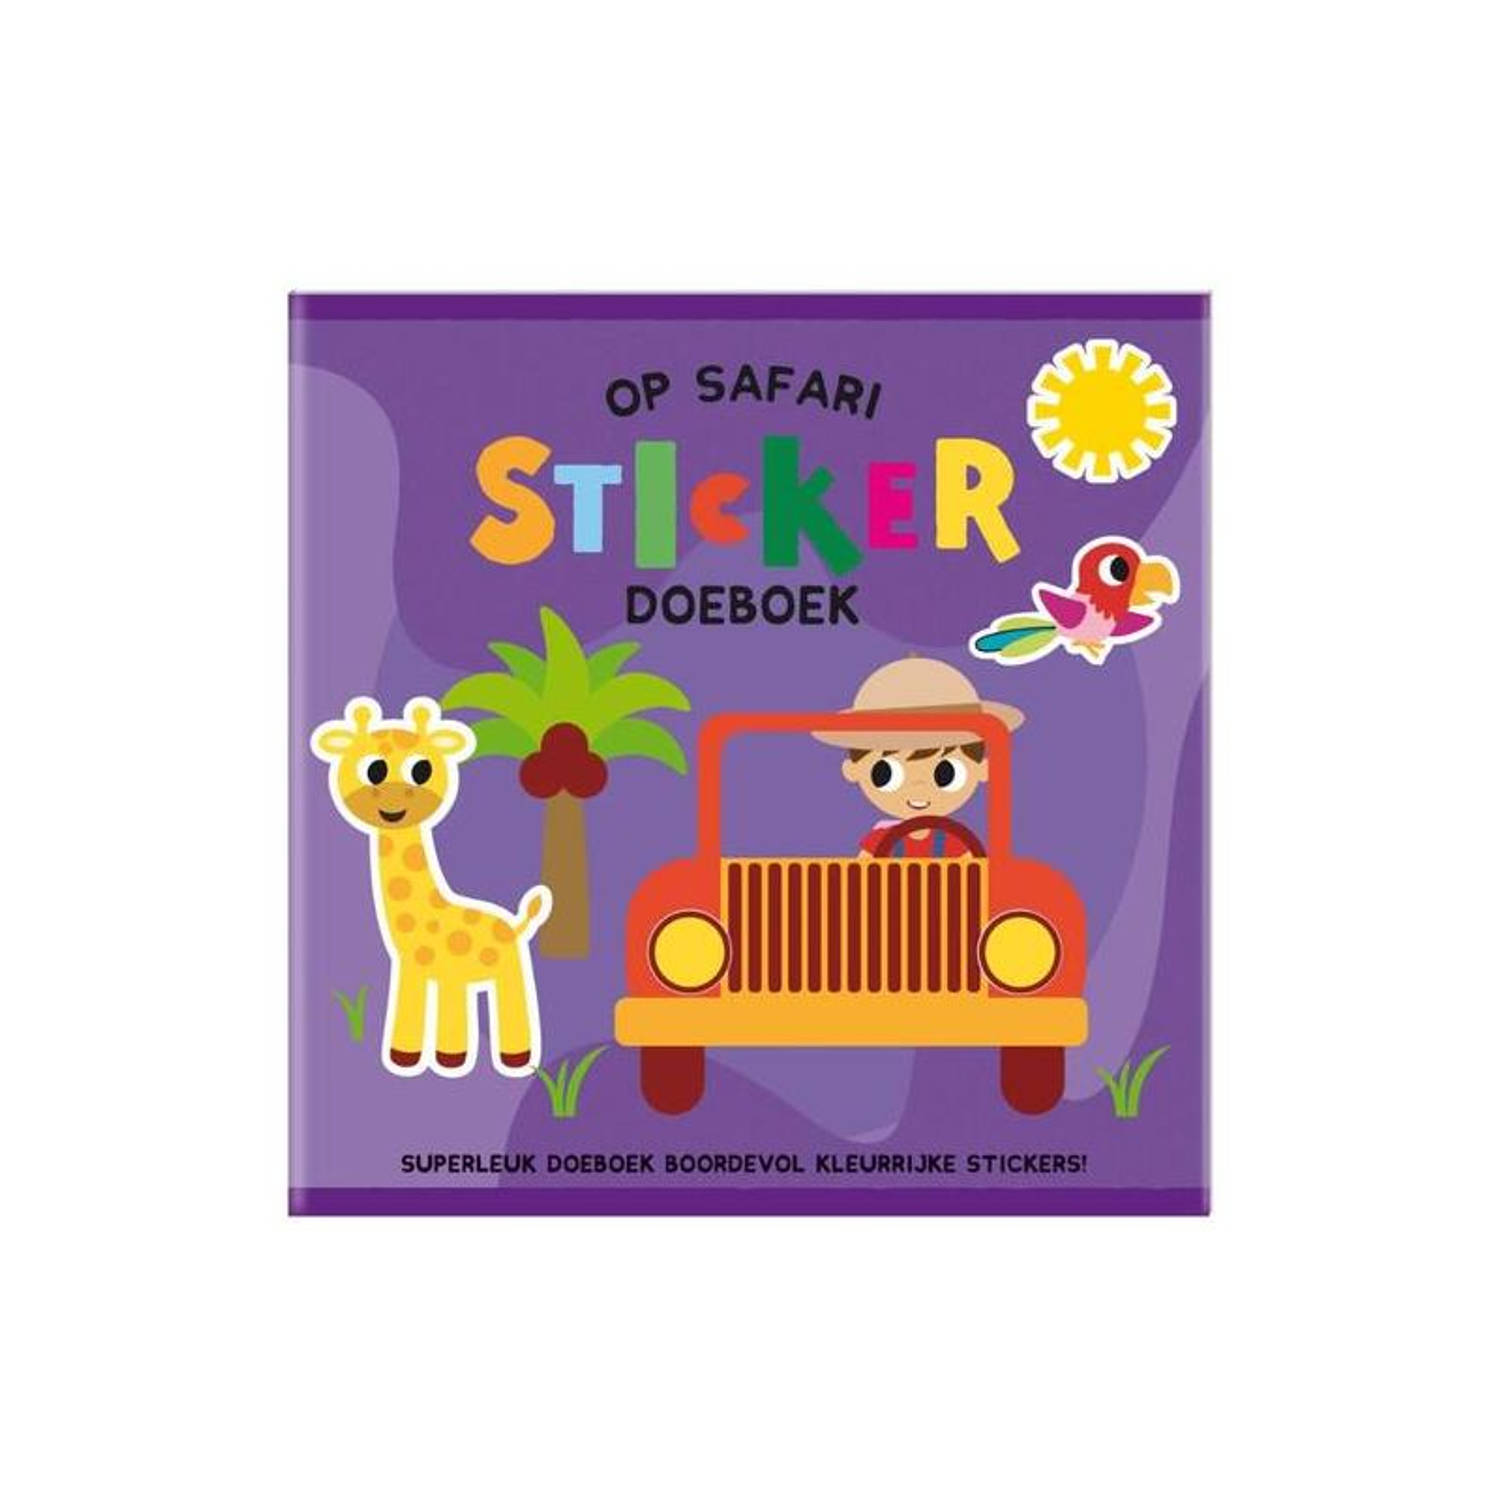 Op Safari Sticker doeboek